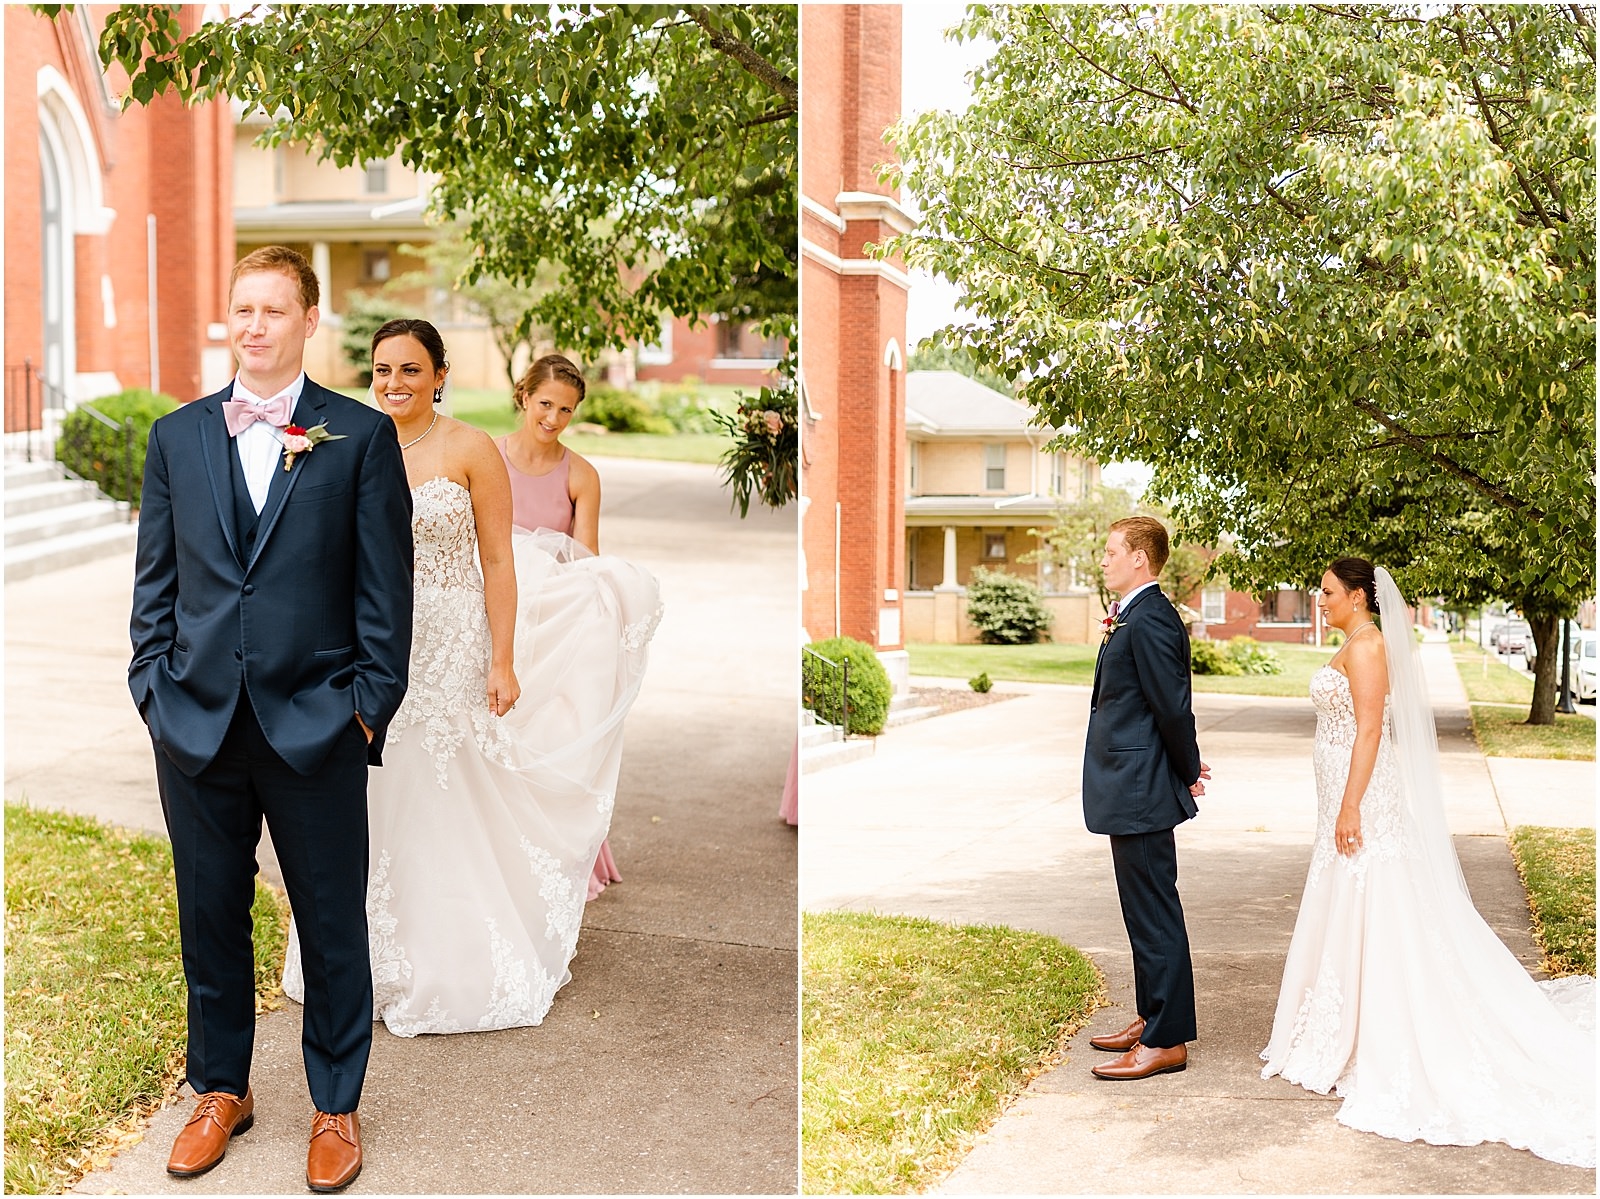 Deidra and Andrew | A Huntingburgh Indiana Wedding Bret and Brandie | Evansville Photographers | @bretandbrandie-0041.jpg